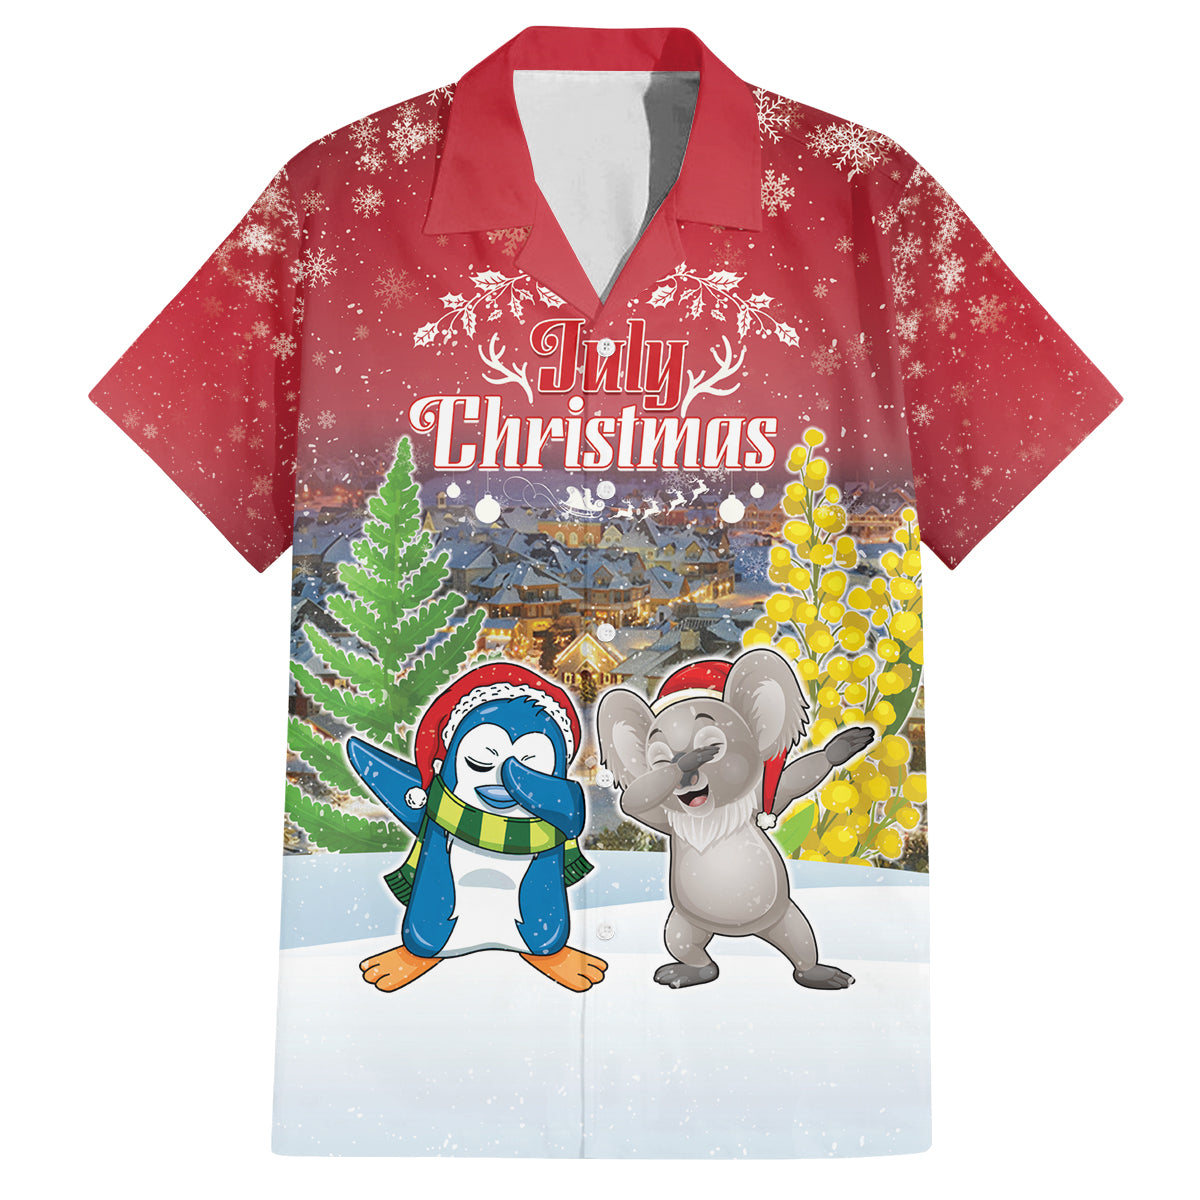 Personalised Christmas In July Family Matching Summer Maxi Dress and Hawaiian Shirt Funny Dabbing Dance Koala And Blue Penguins